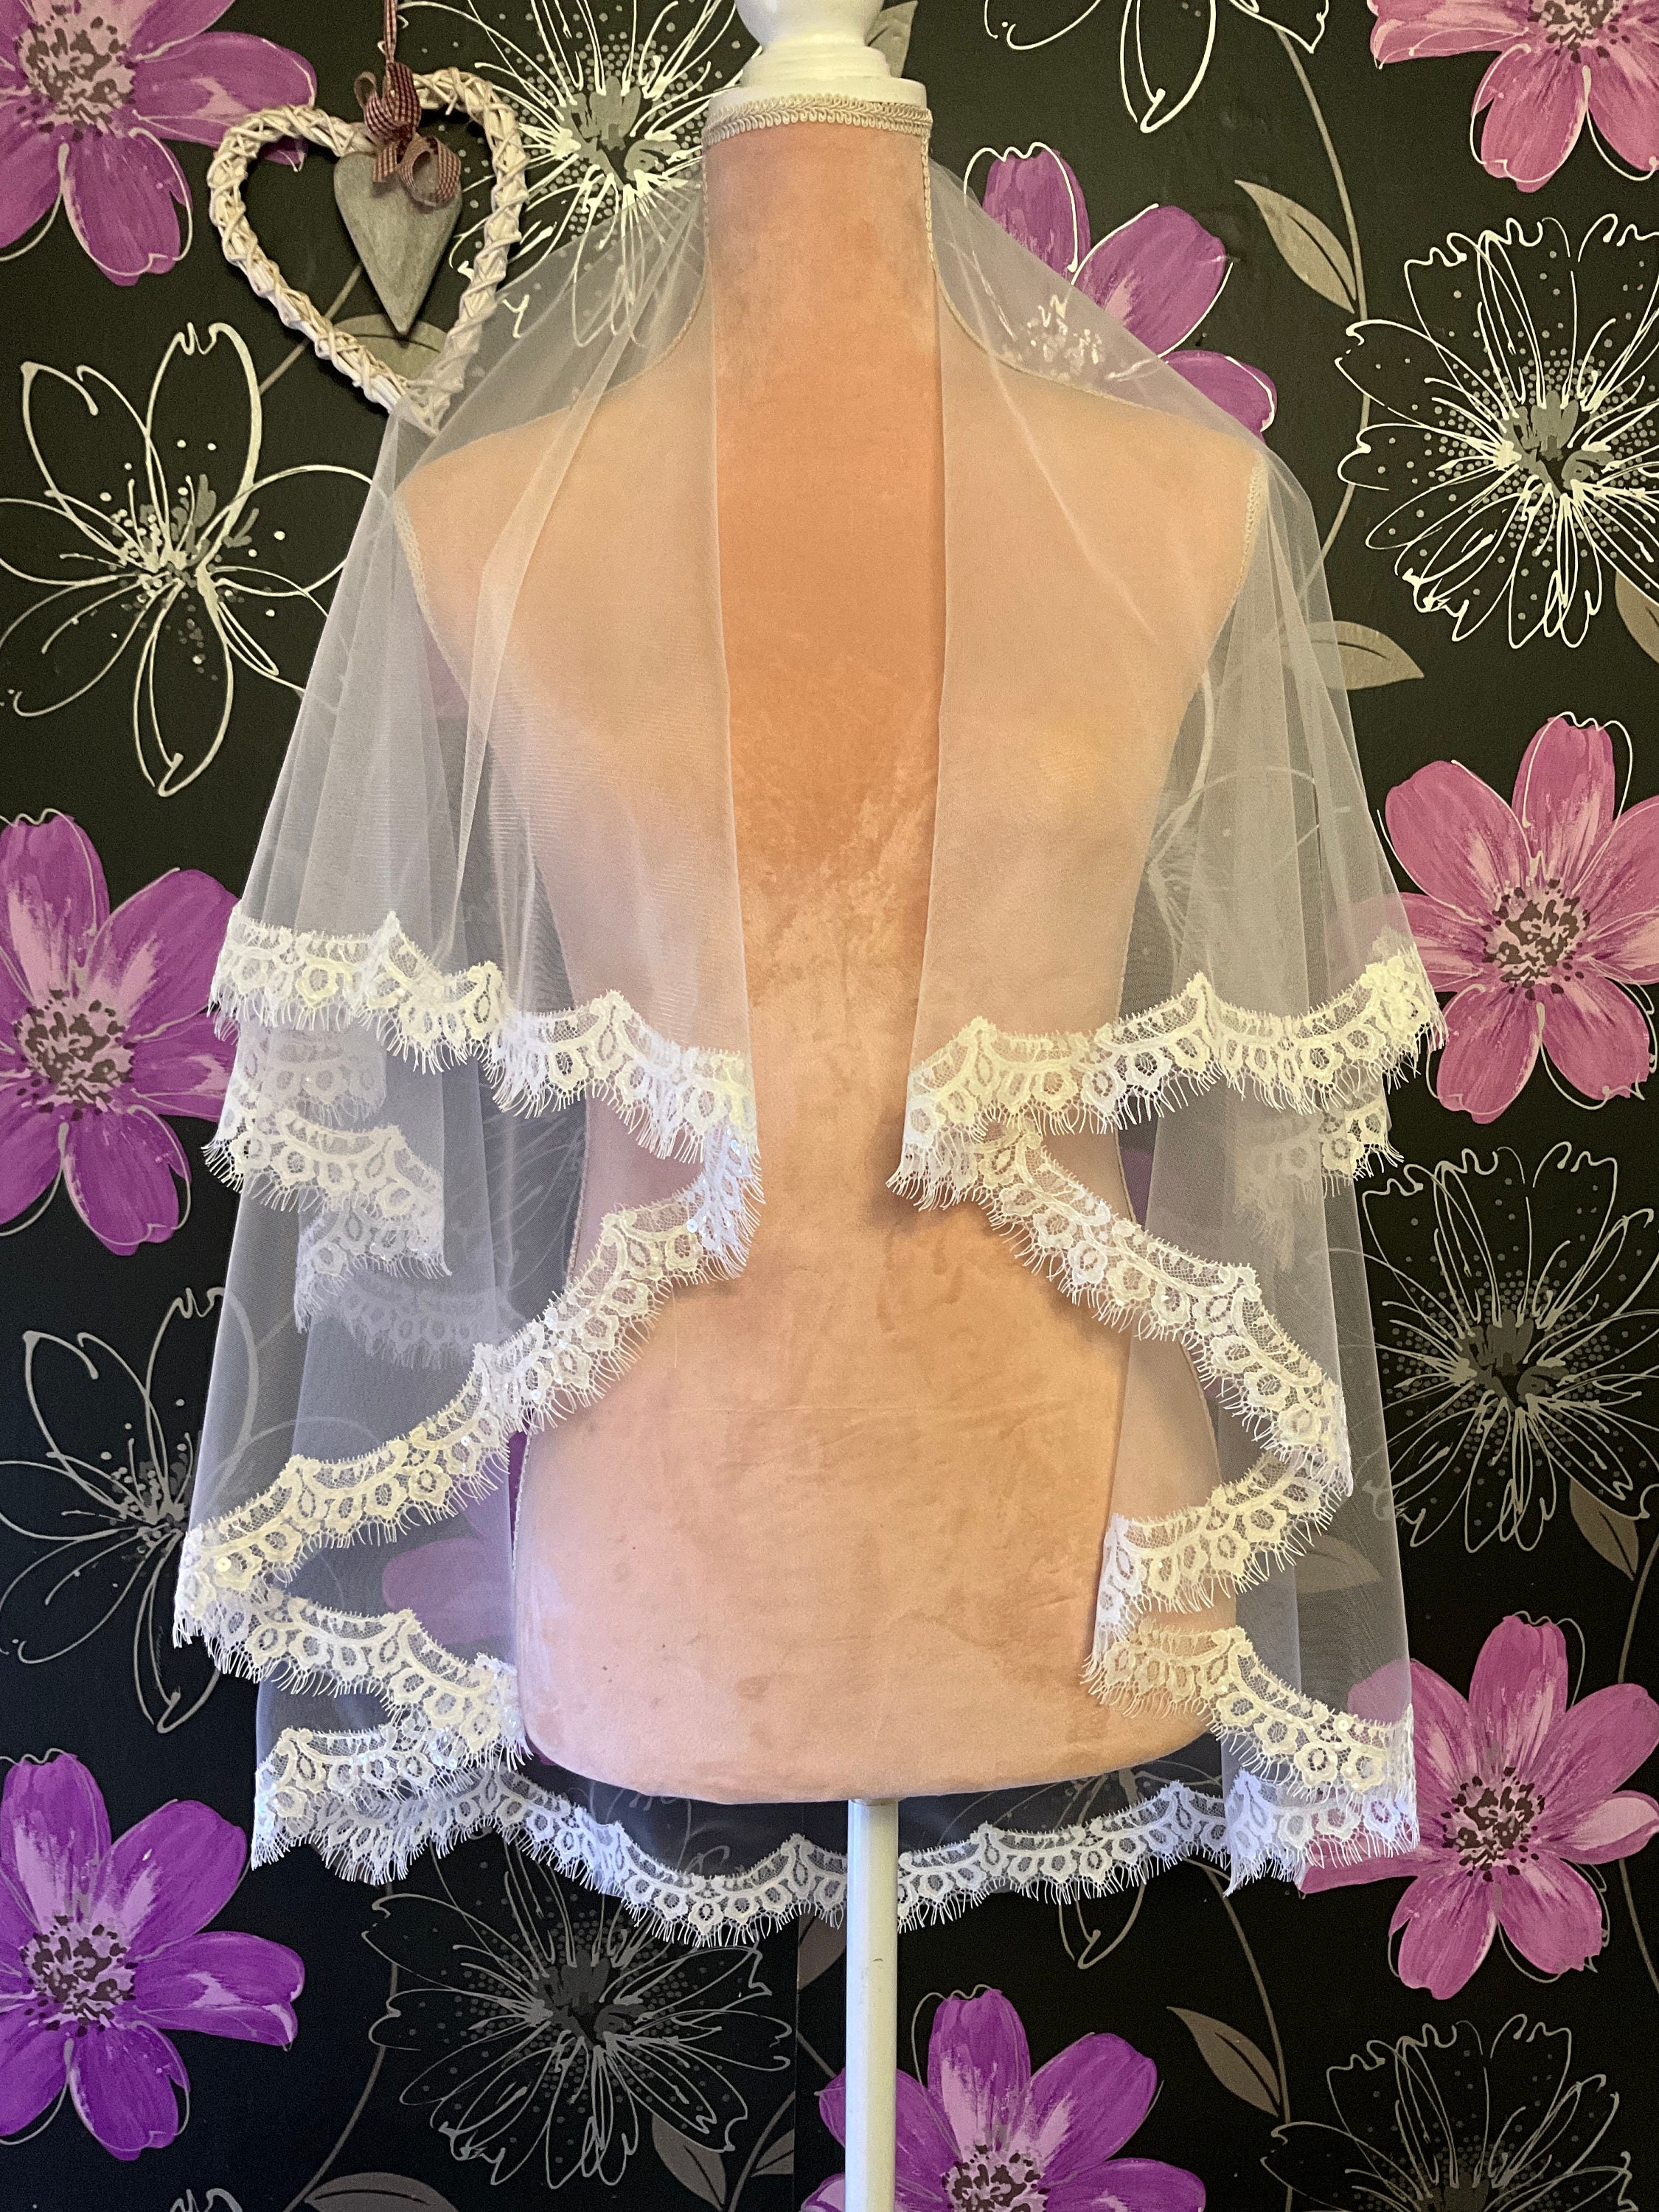 3 Yards Black Floral Eyelash Corded Lace Trim for Sewing/Bridal/Crafts/3.5  Wide